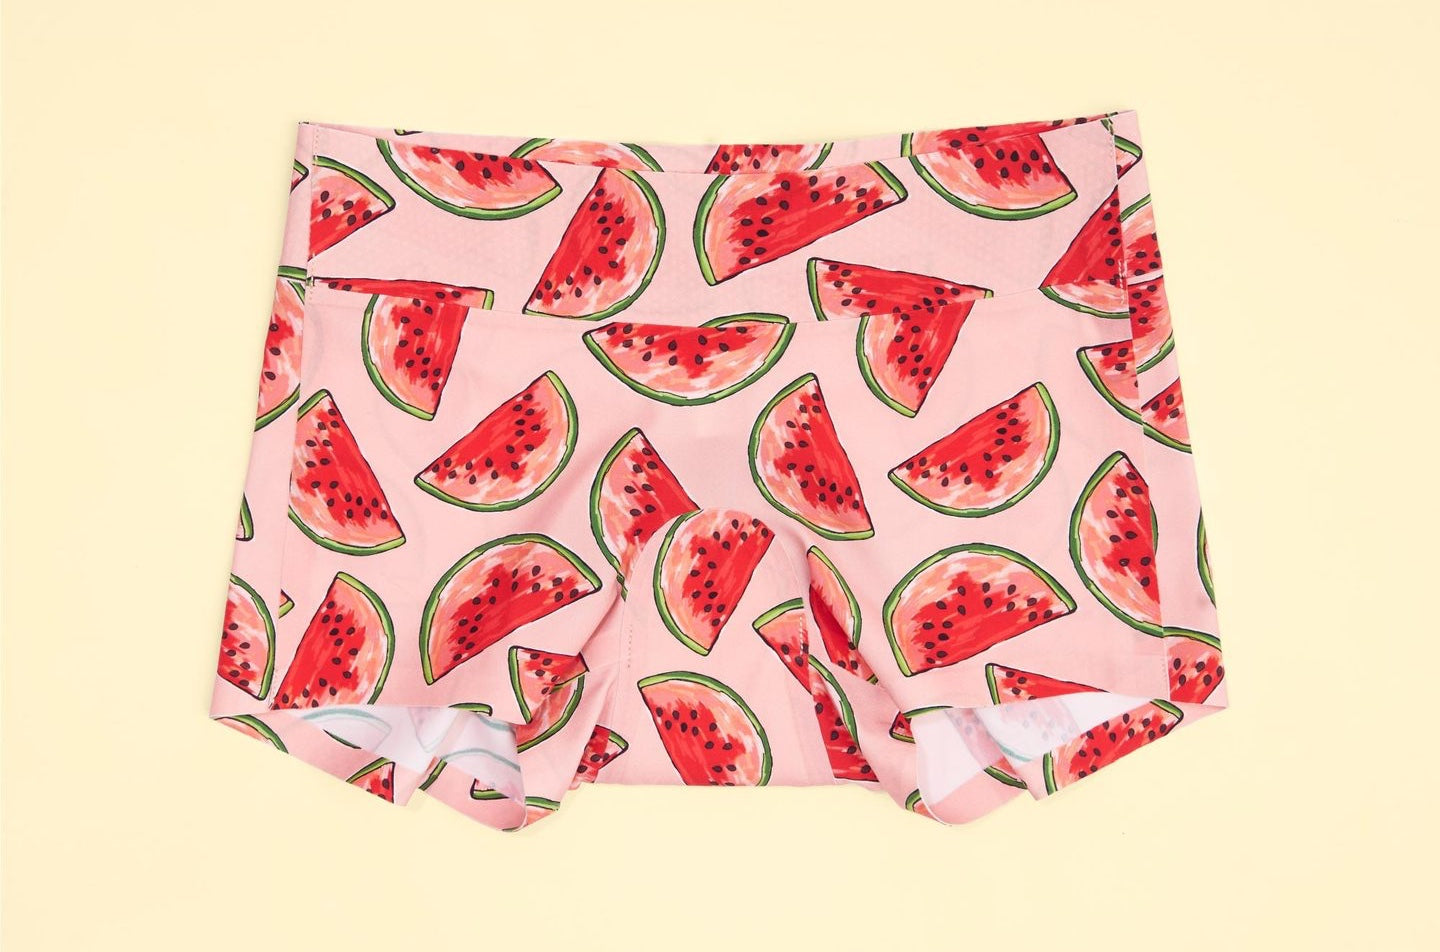 Watermelon-print boy short style underwear by Knixteen